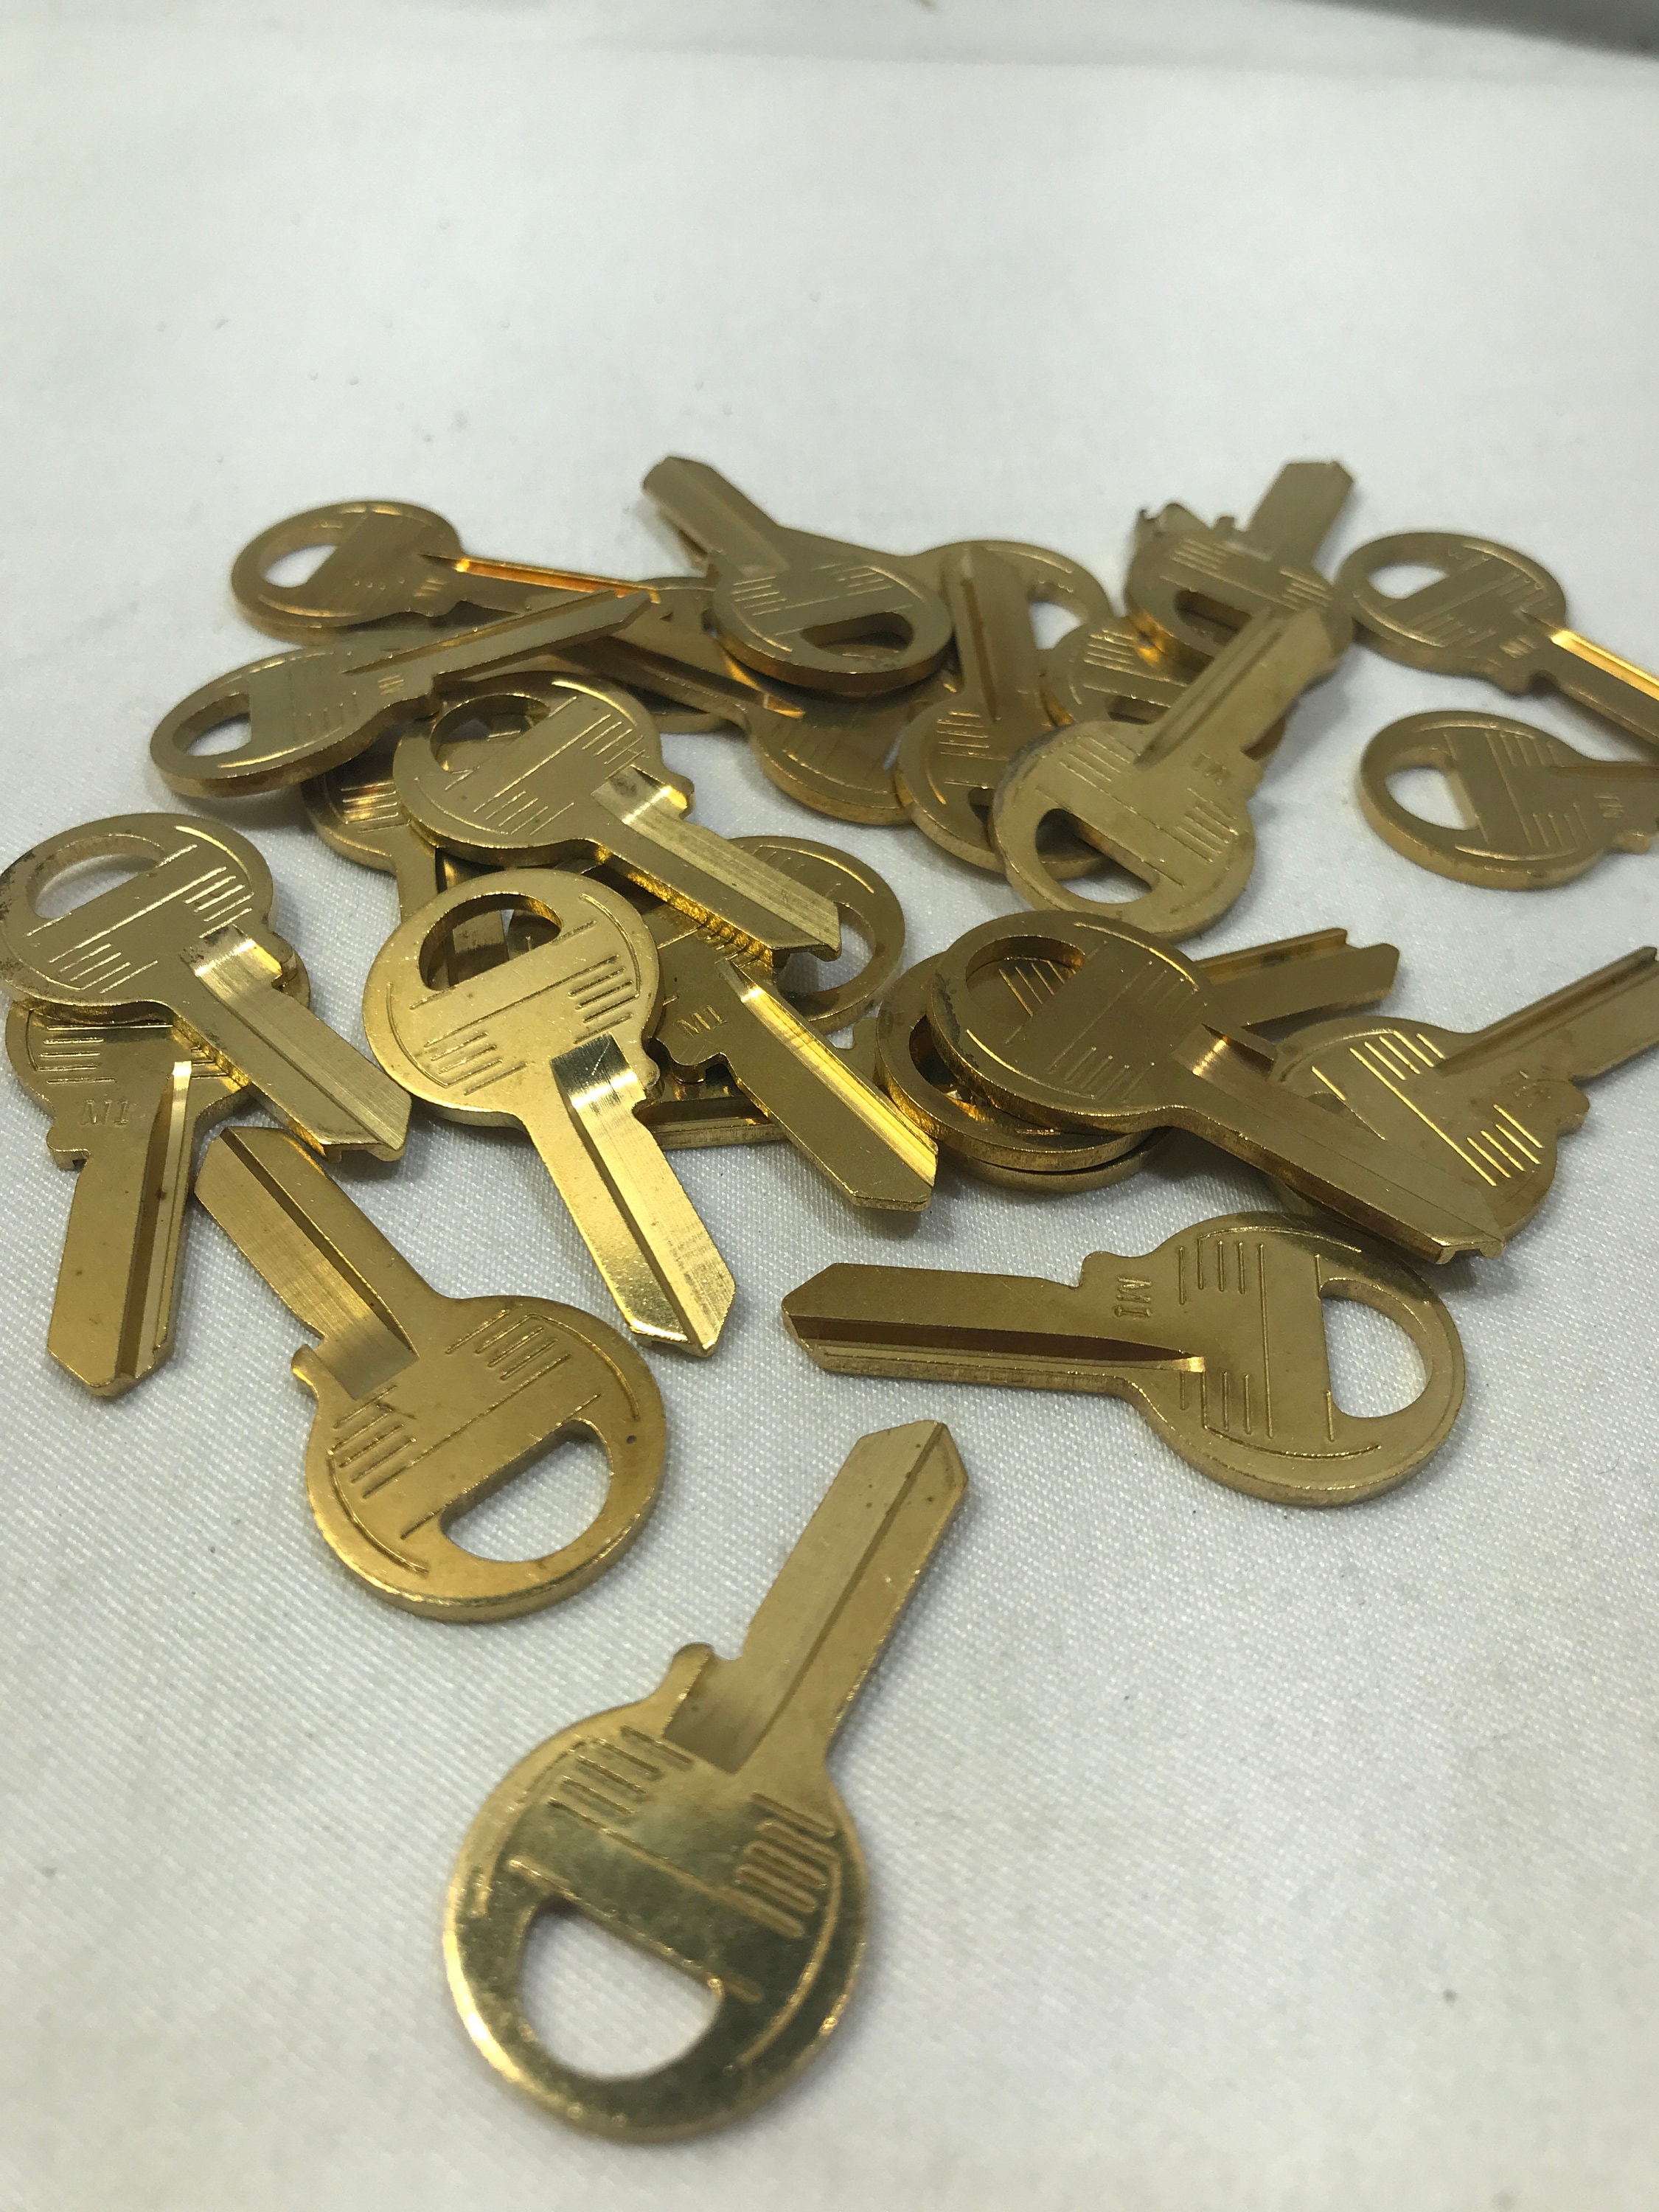 Large Solid Brass Key Rings Bracelet Style Raw Brass Wire EDC Tool Screw  Locking Carabiner Keychain Holder Wristlet 